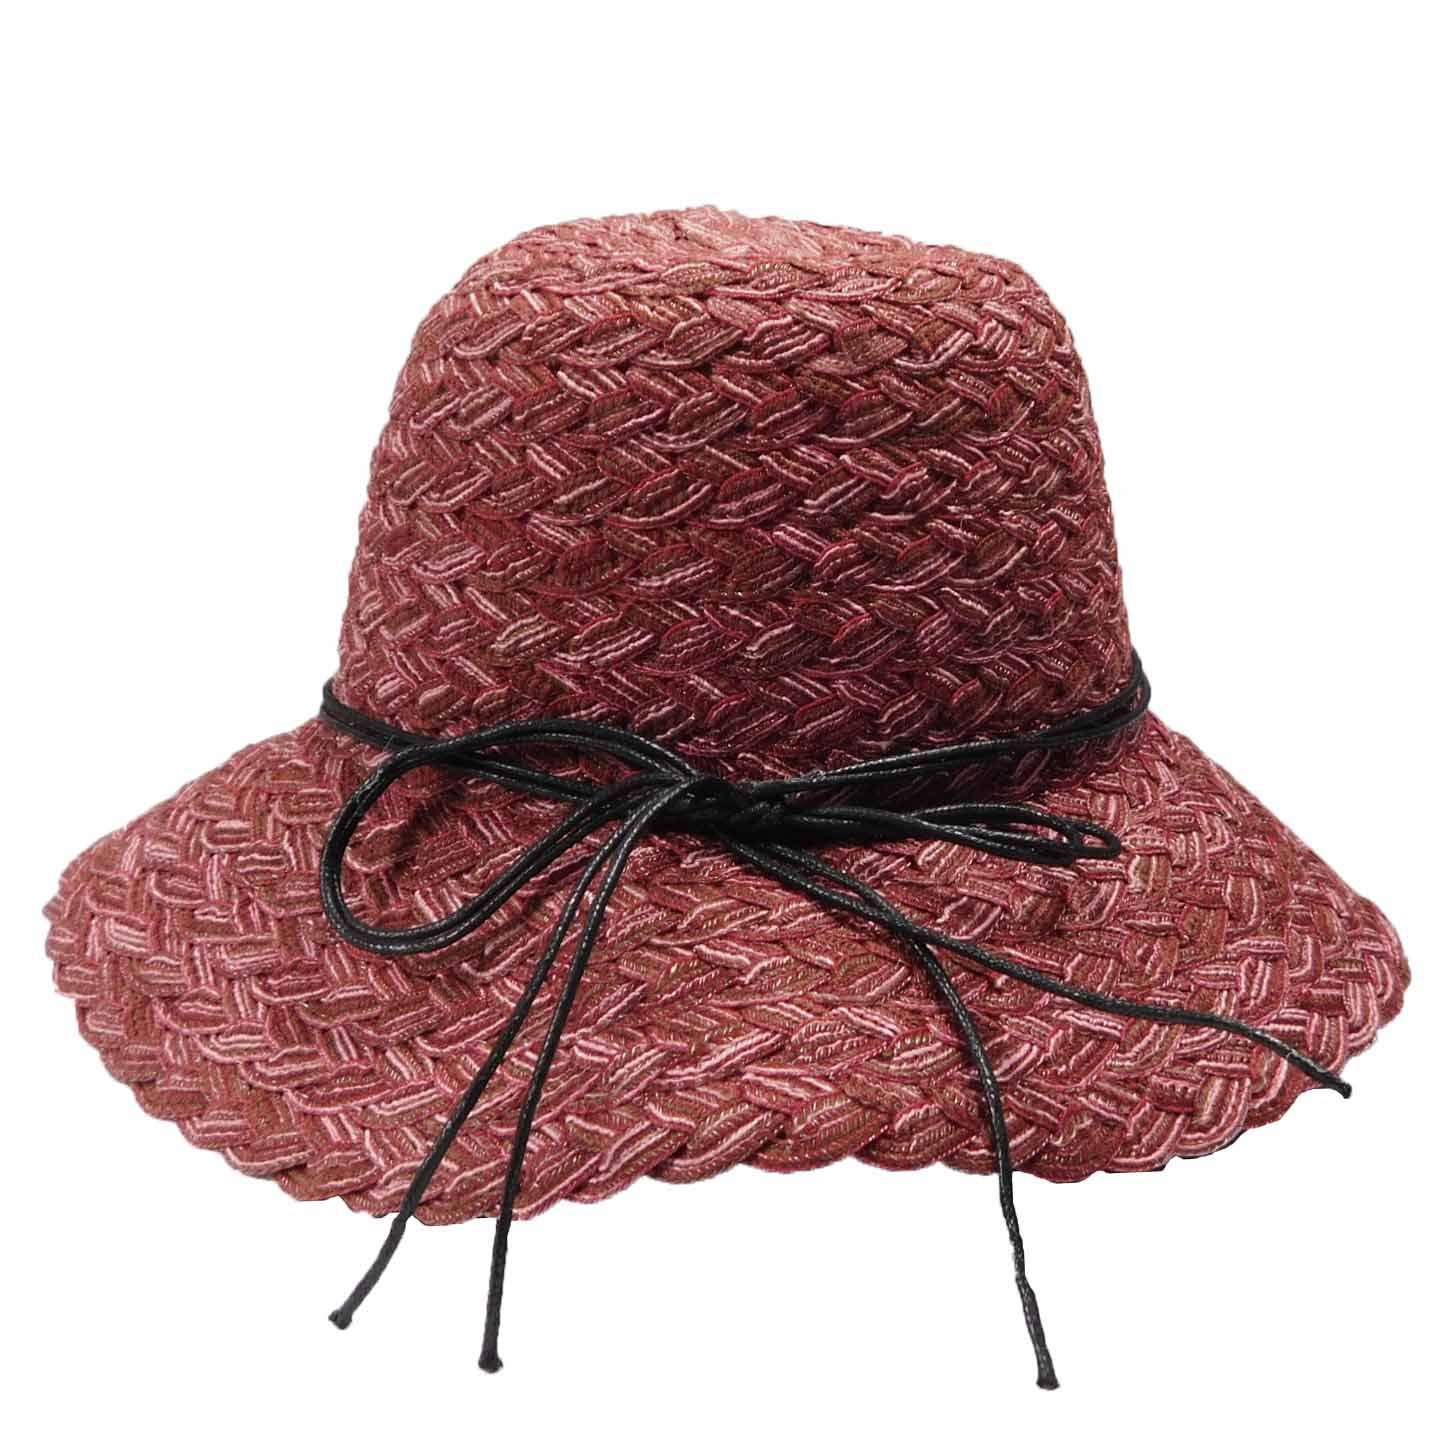 Twisted Poly-Braid Summer Hat by JSA for Women Cloche Jeanne Simmons WSjs8438WN Wine  